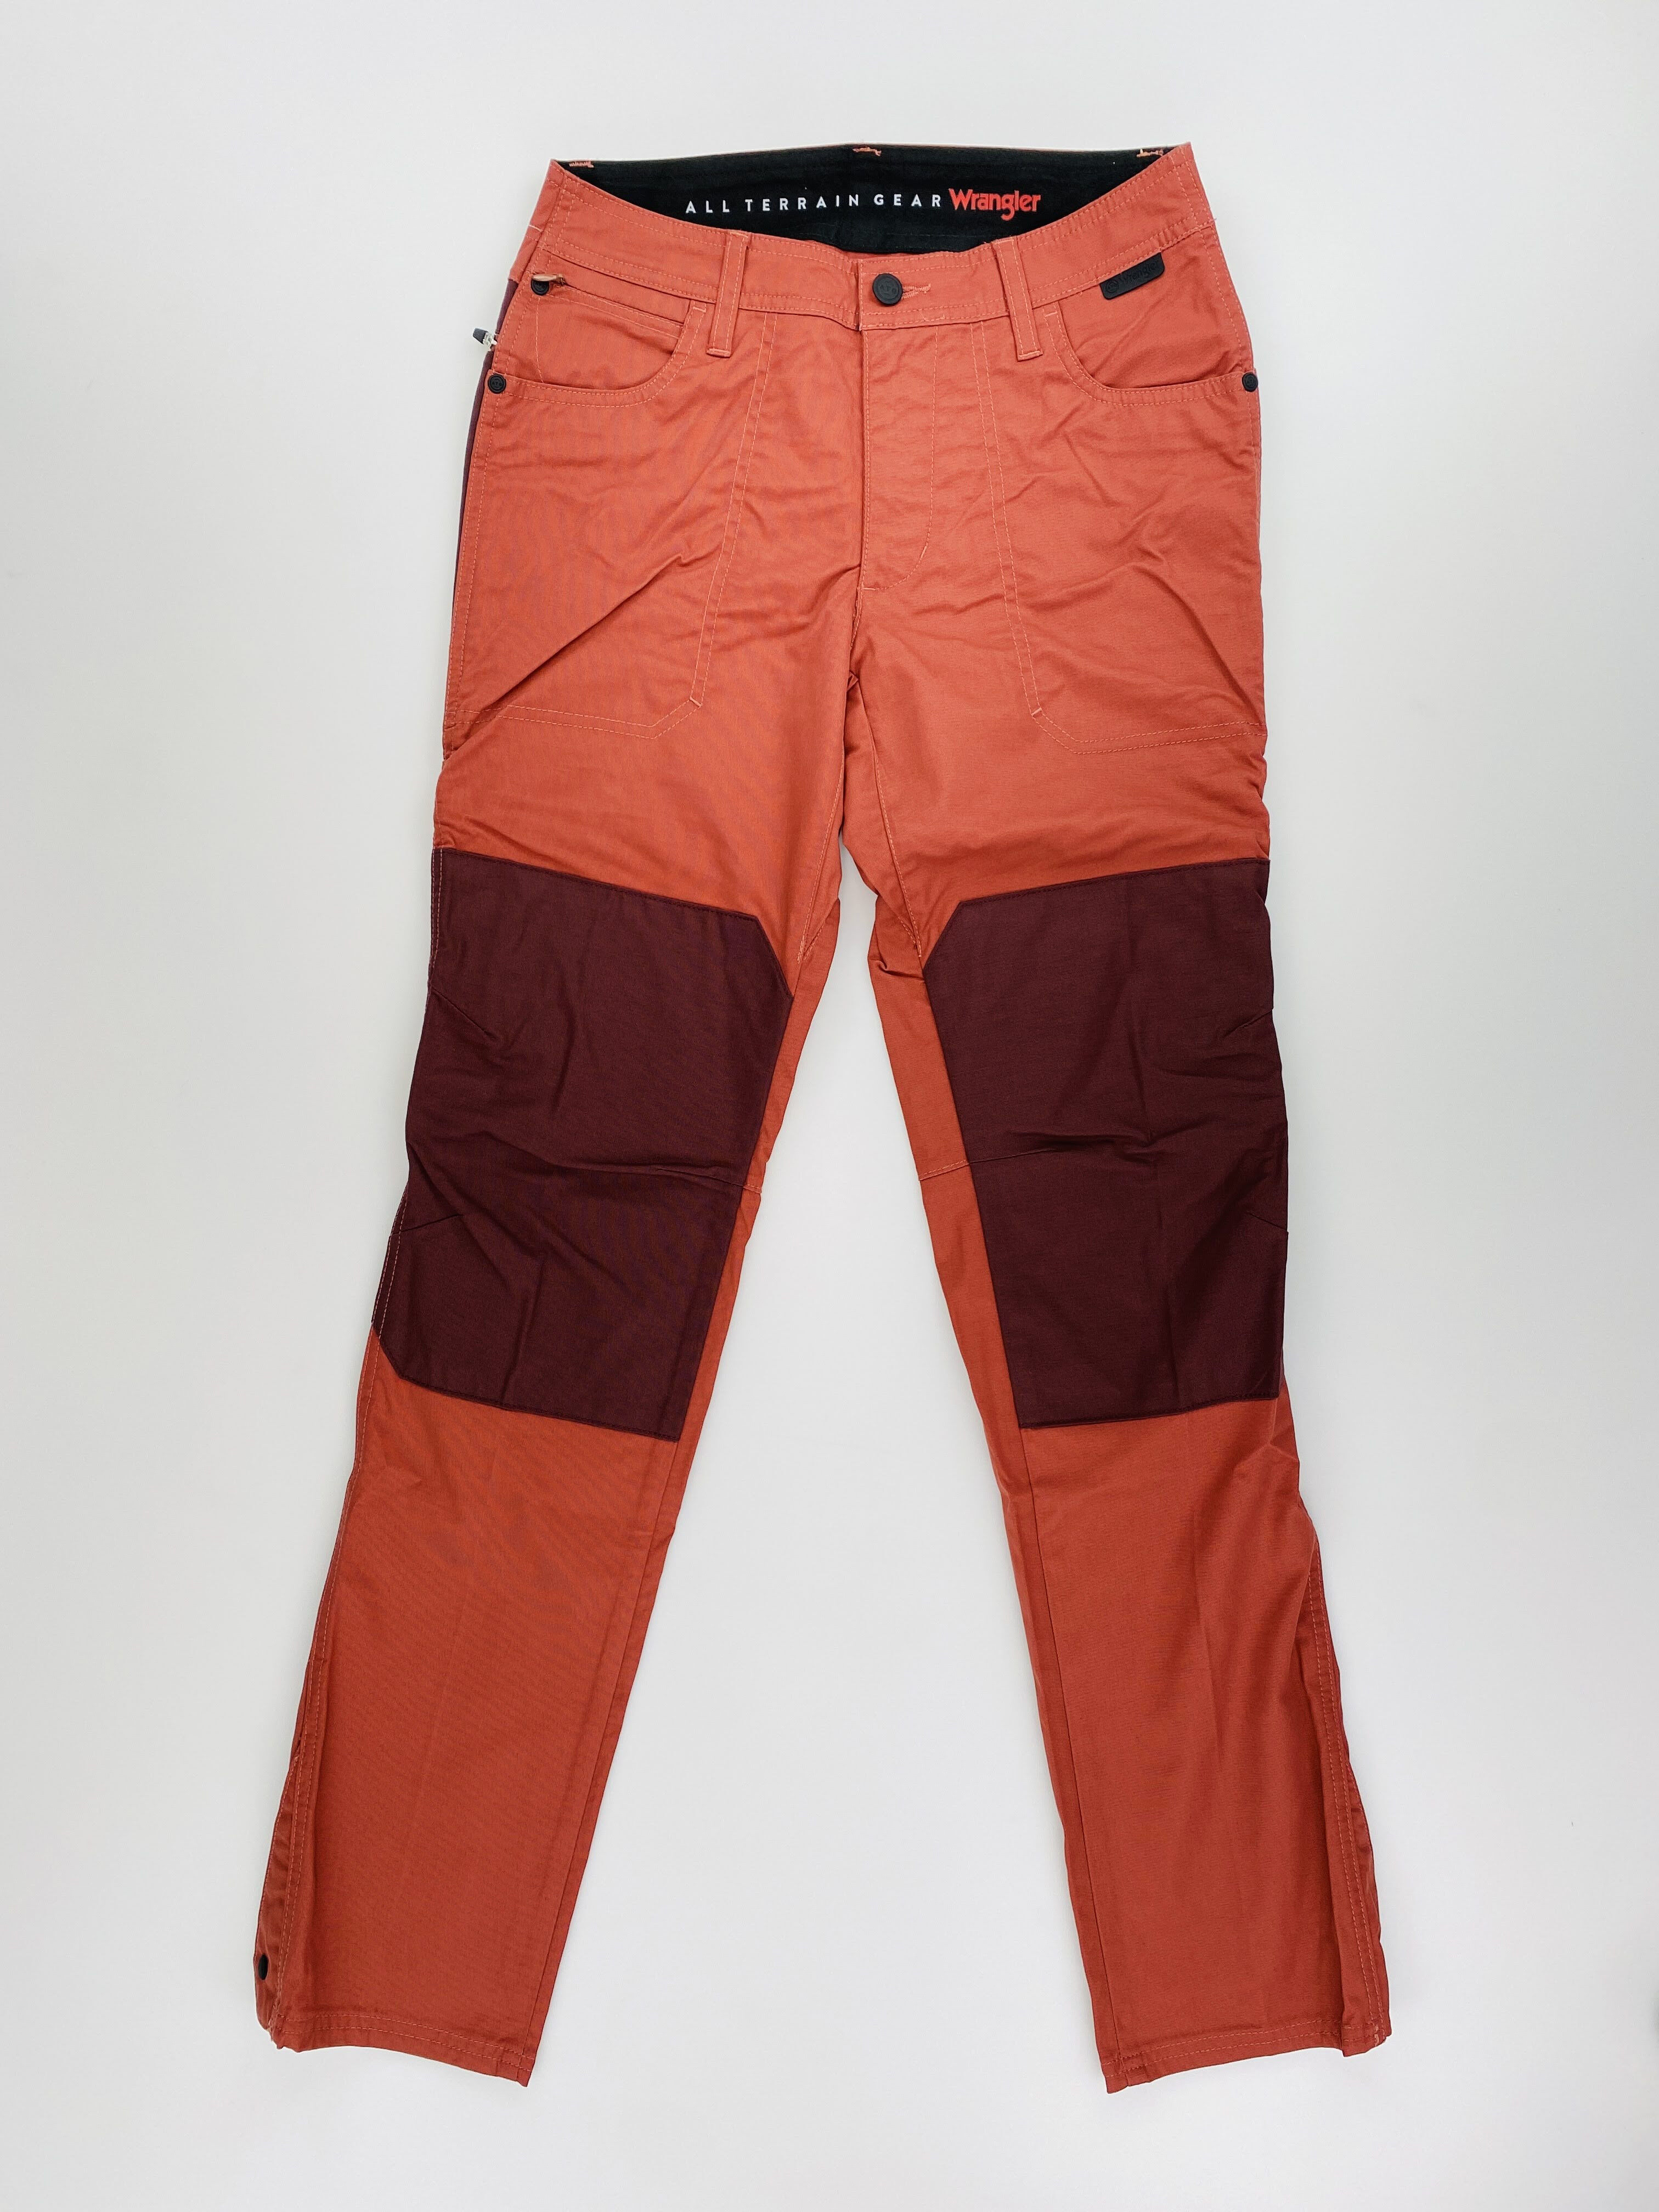 Wrangler Reinforced Softshell Pant - Seconde main Pantalon randonnée femme - Rouge - US 28 | Hardloop